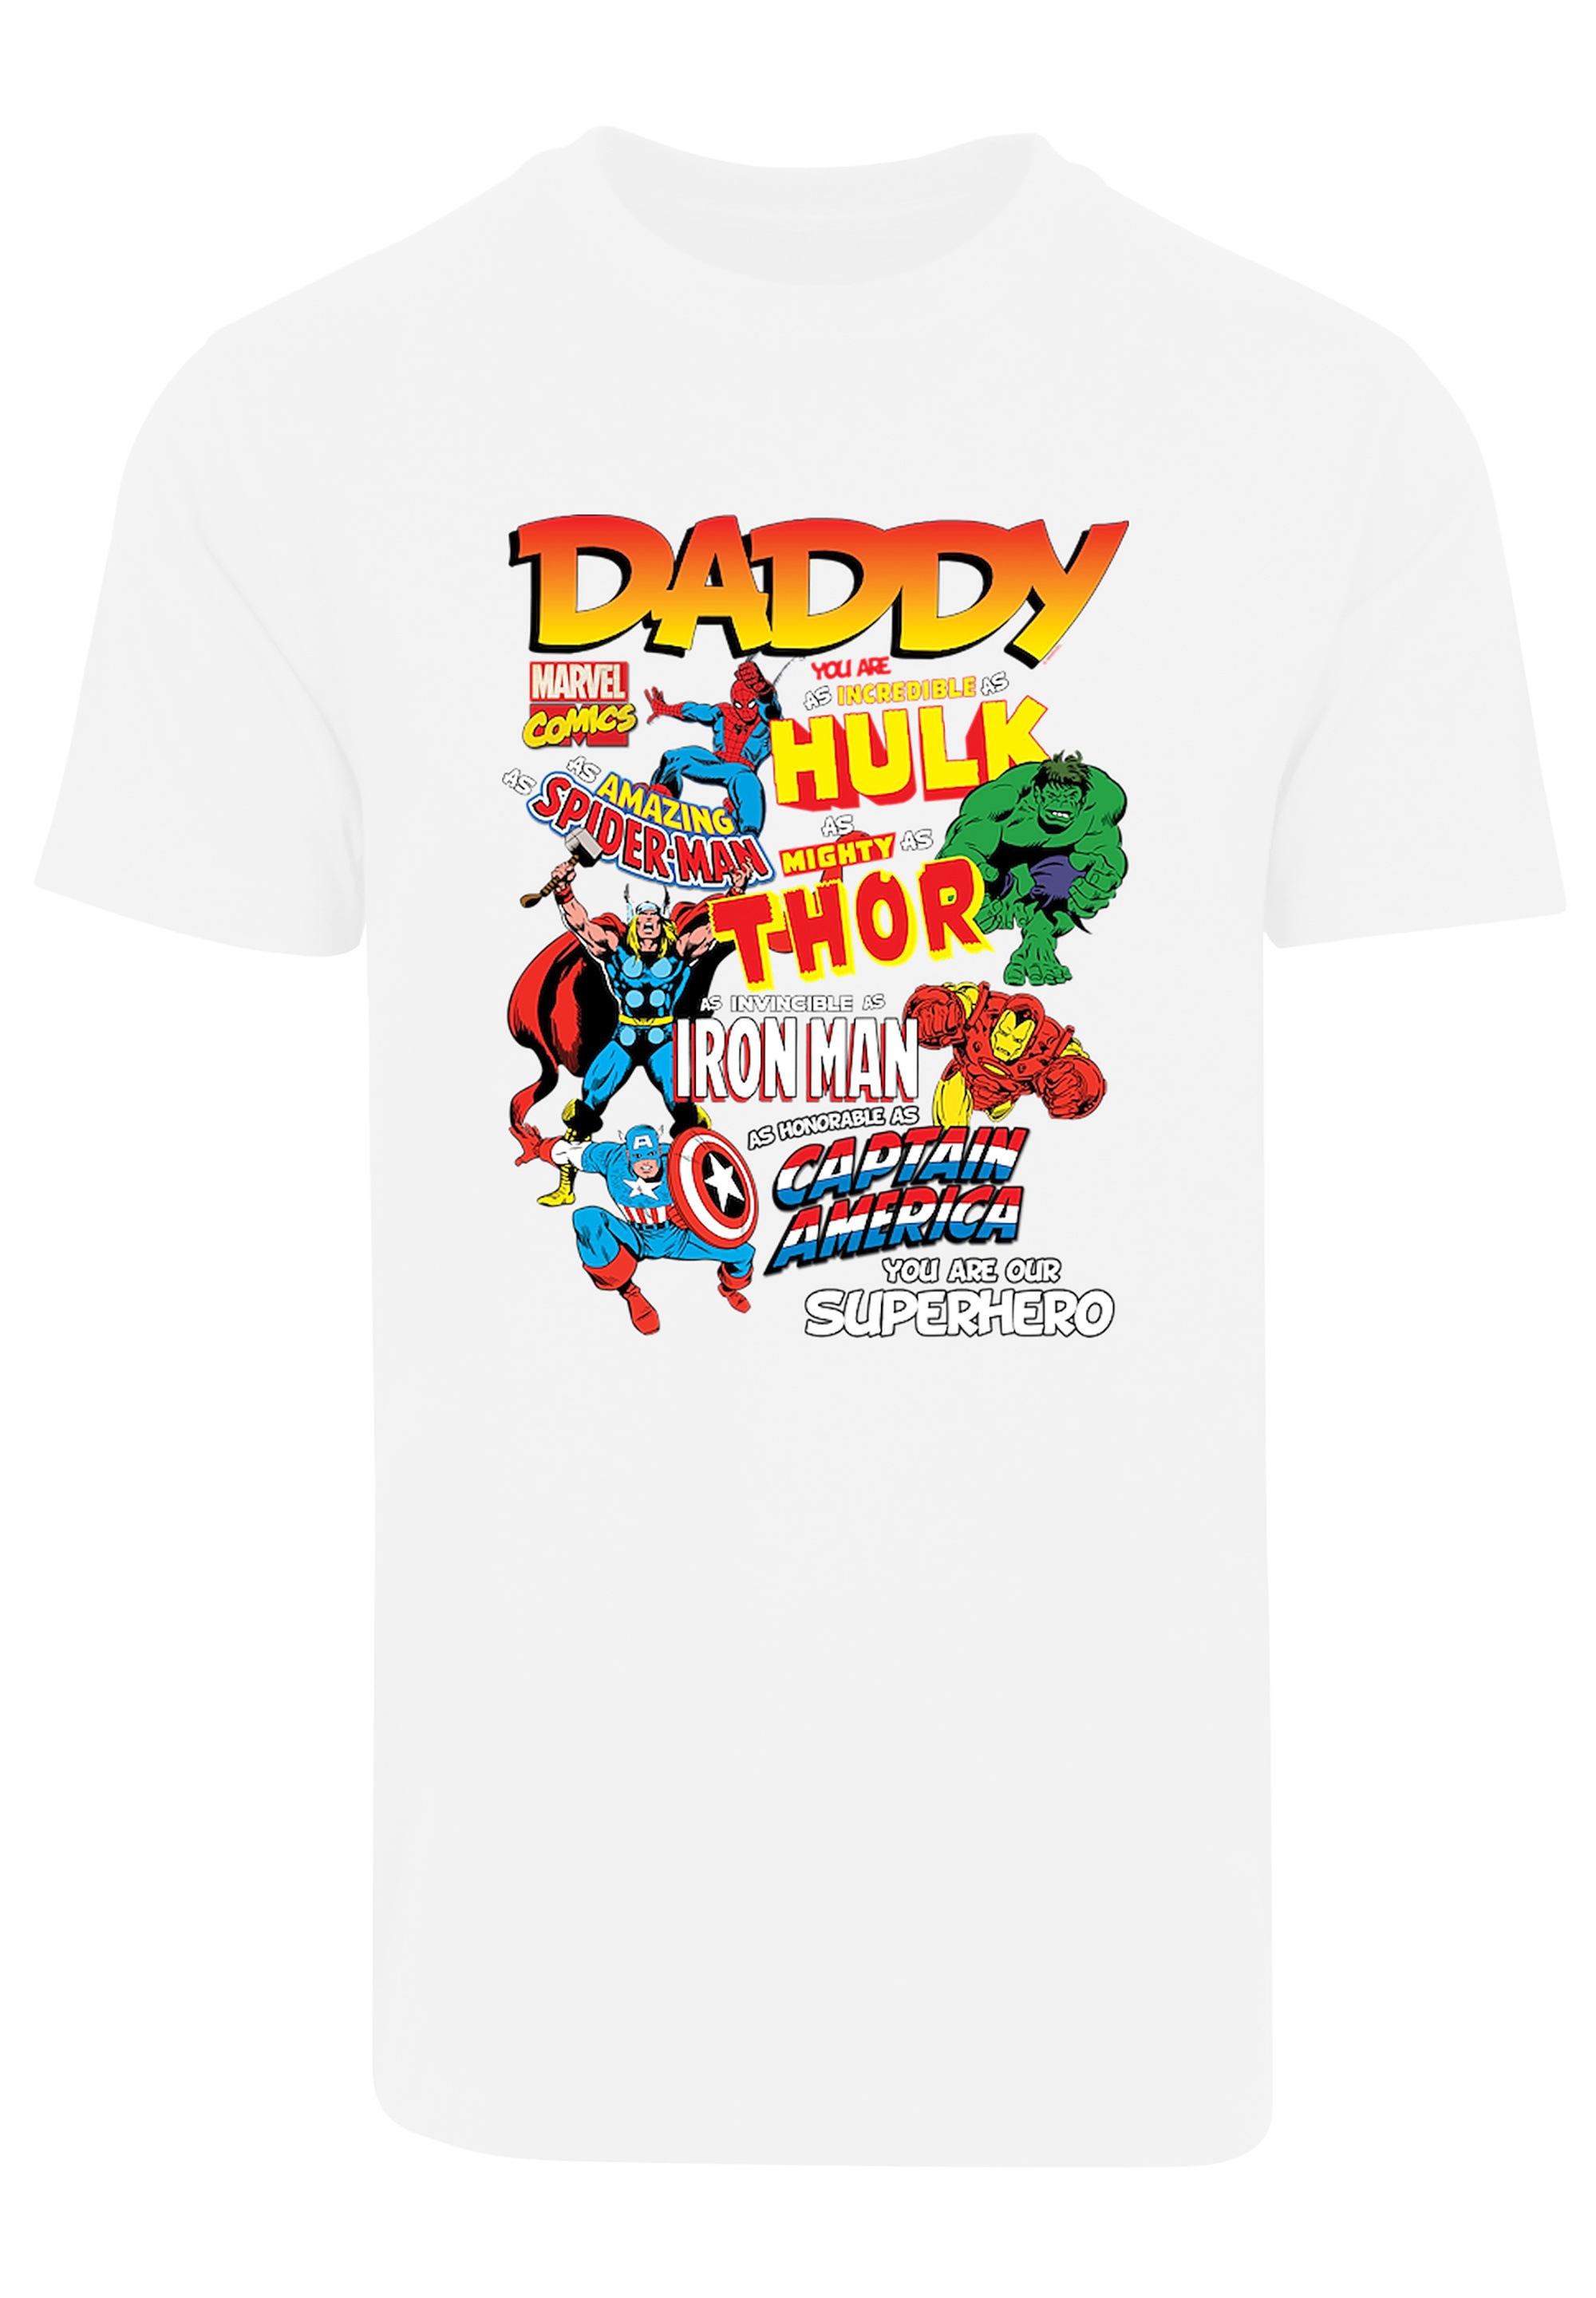 T-Shirt Our | F4NT4STIC Superhero«, Black Print BAUR Friday Comics Dad »Marvel